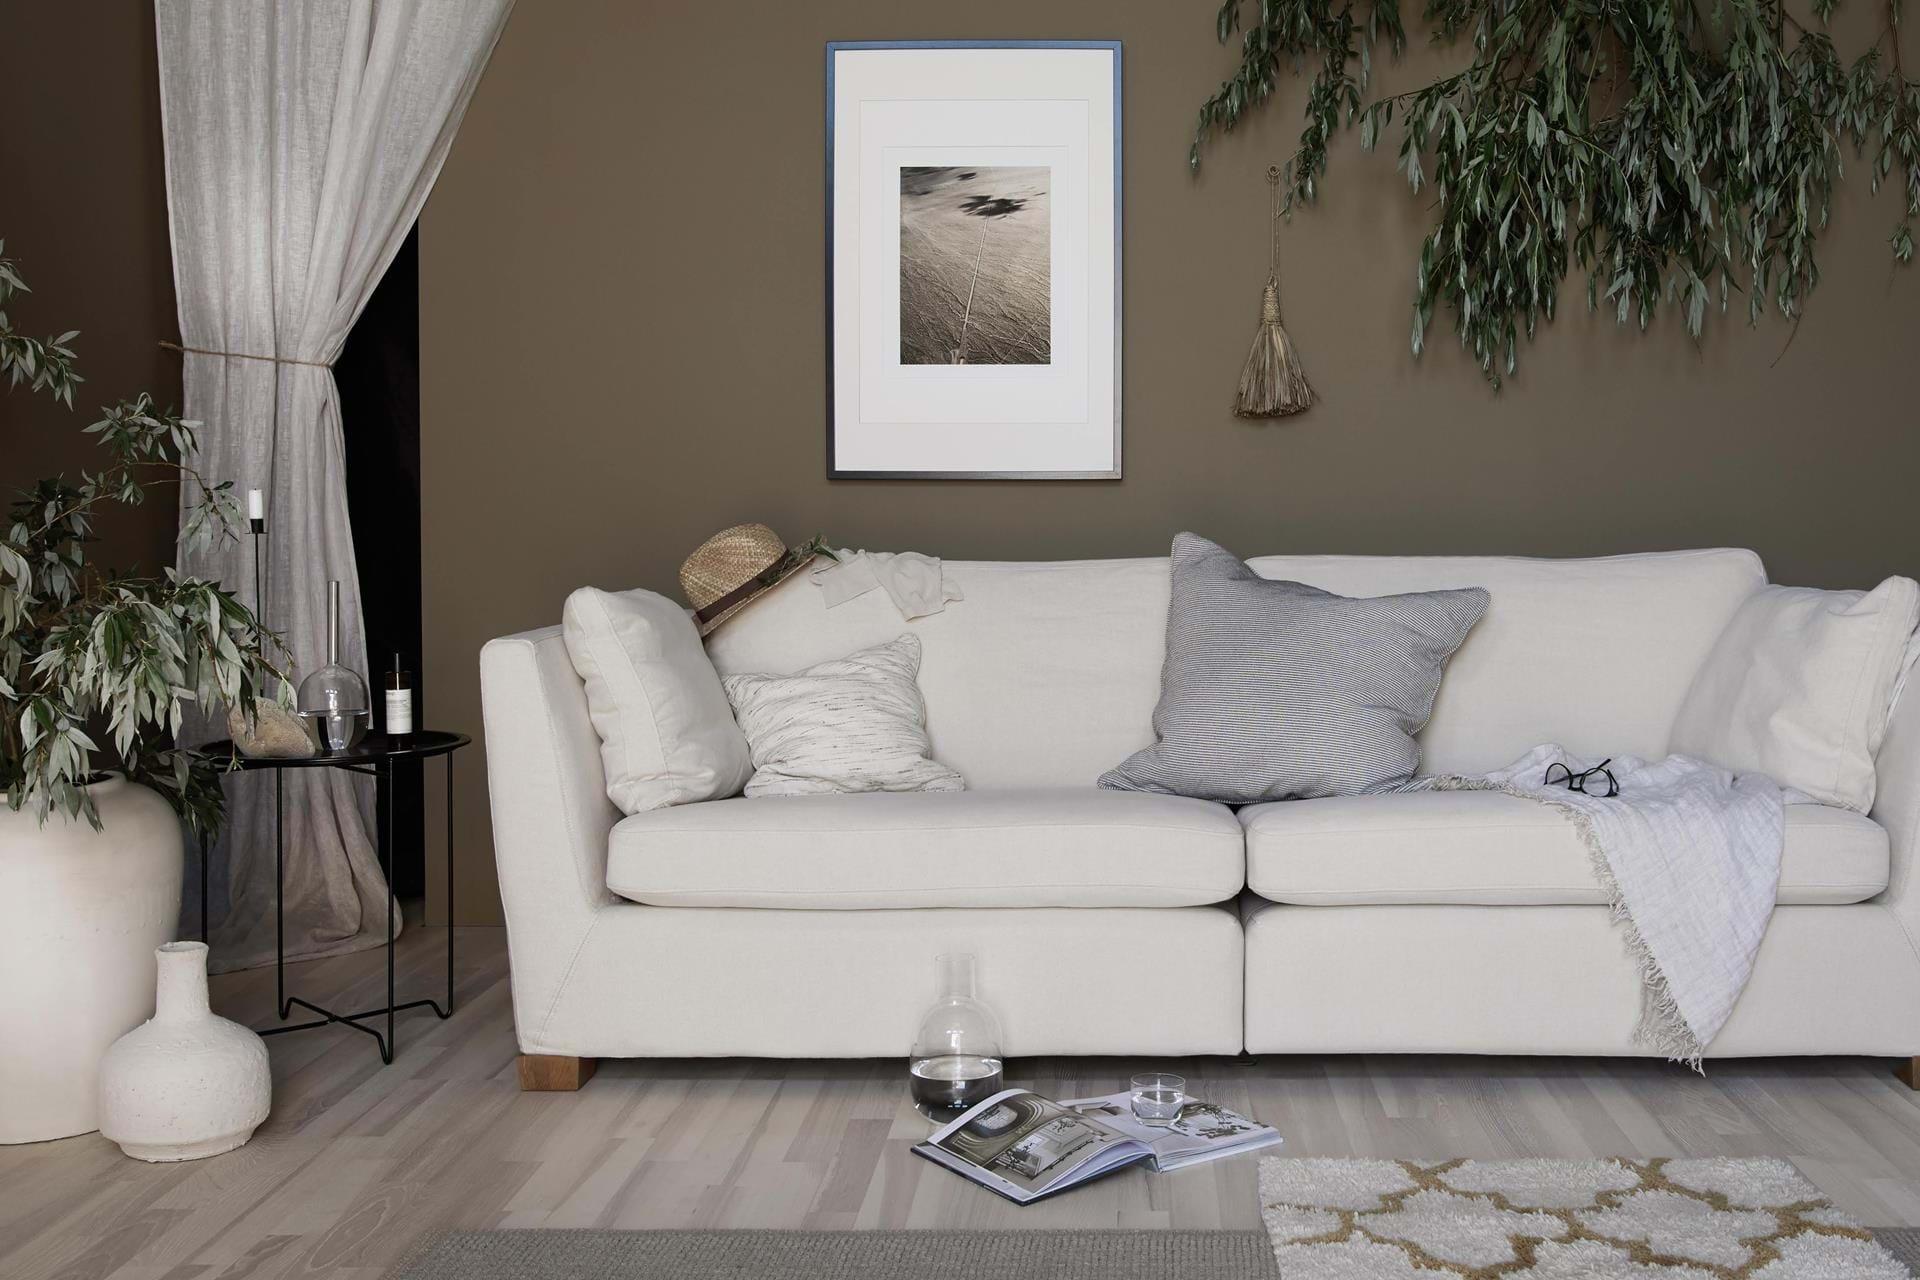 Home decor: ideas to inspire you - IKEA Spain